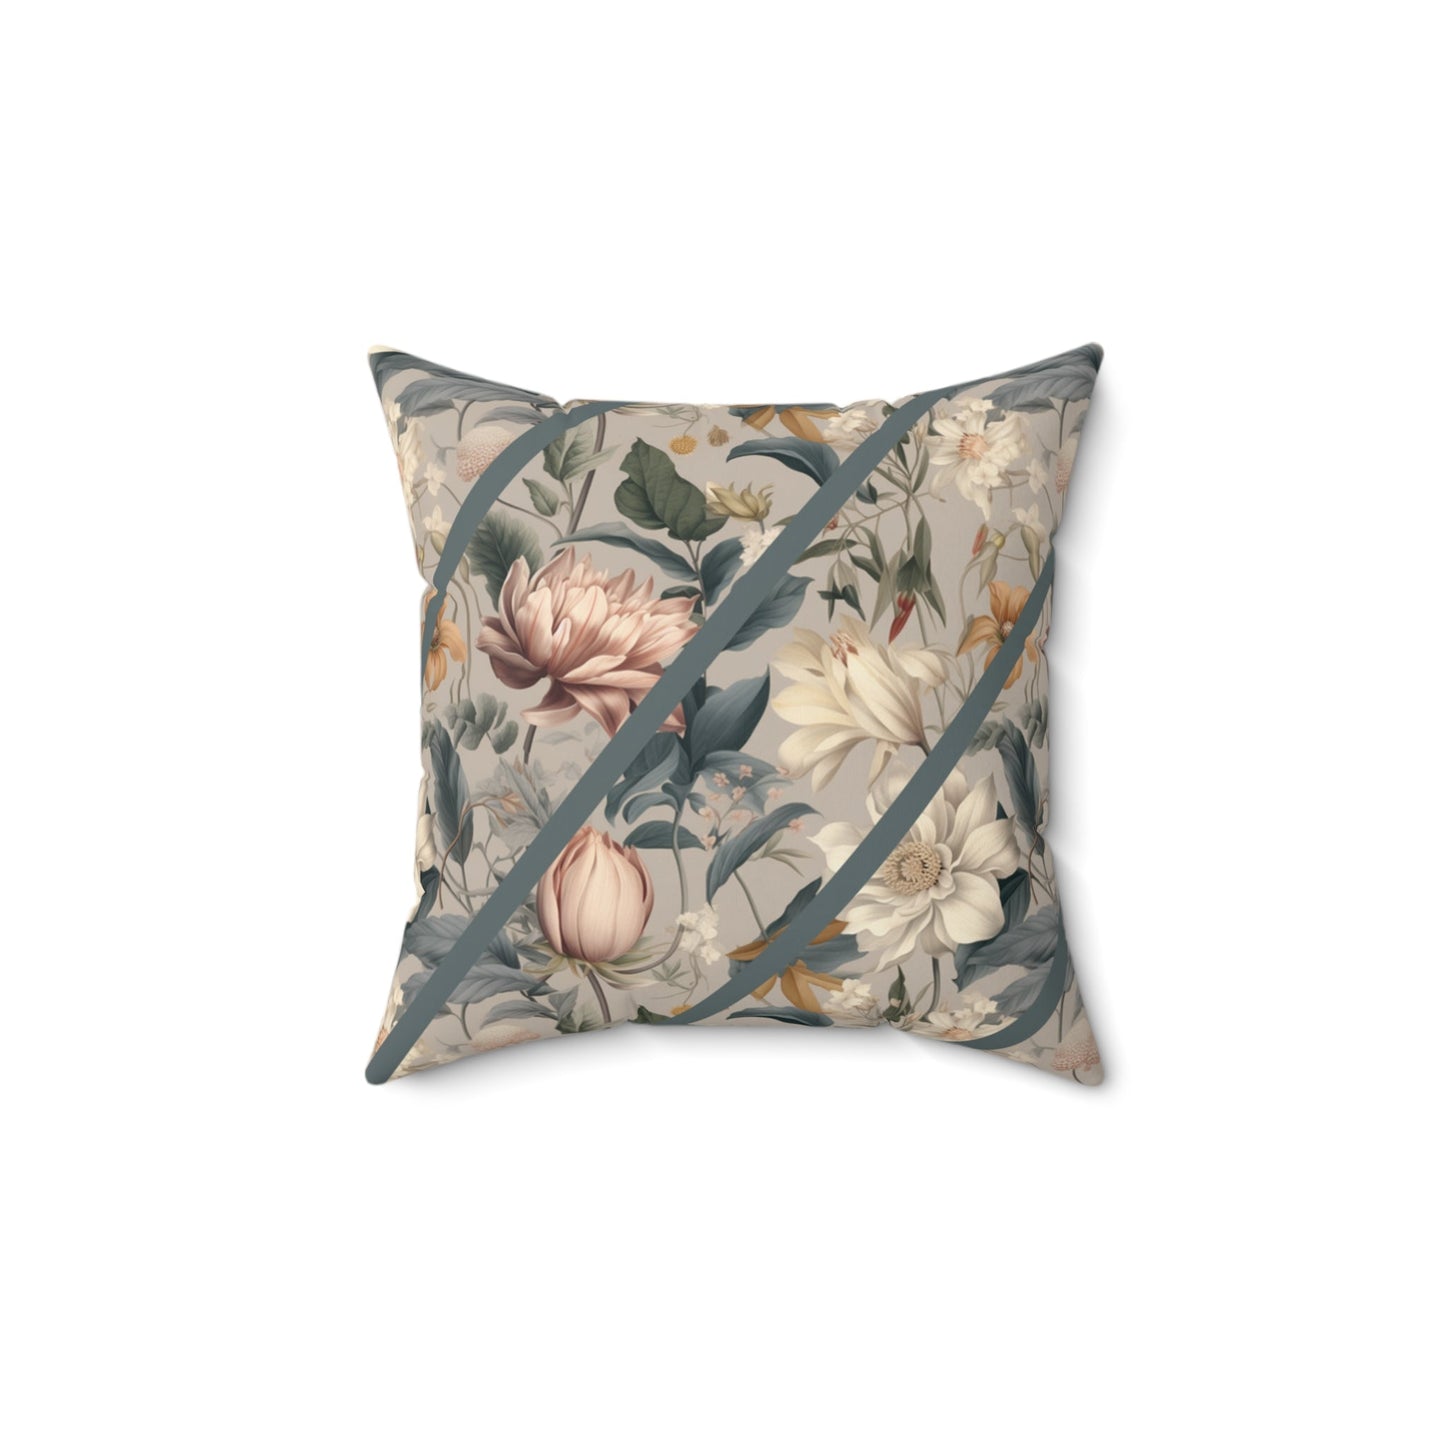 William Morris Style Garden Pillow, Sage Greens, grays, and Creme, Elegant Throw Pillow - FlooredByArt